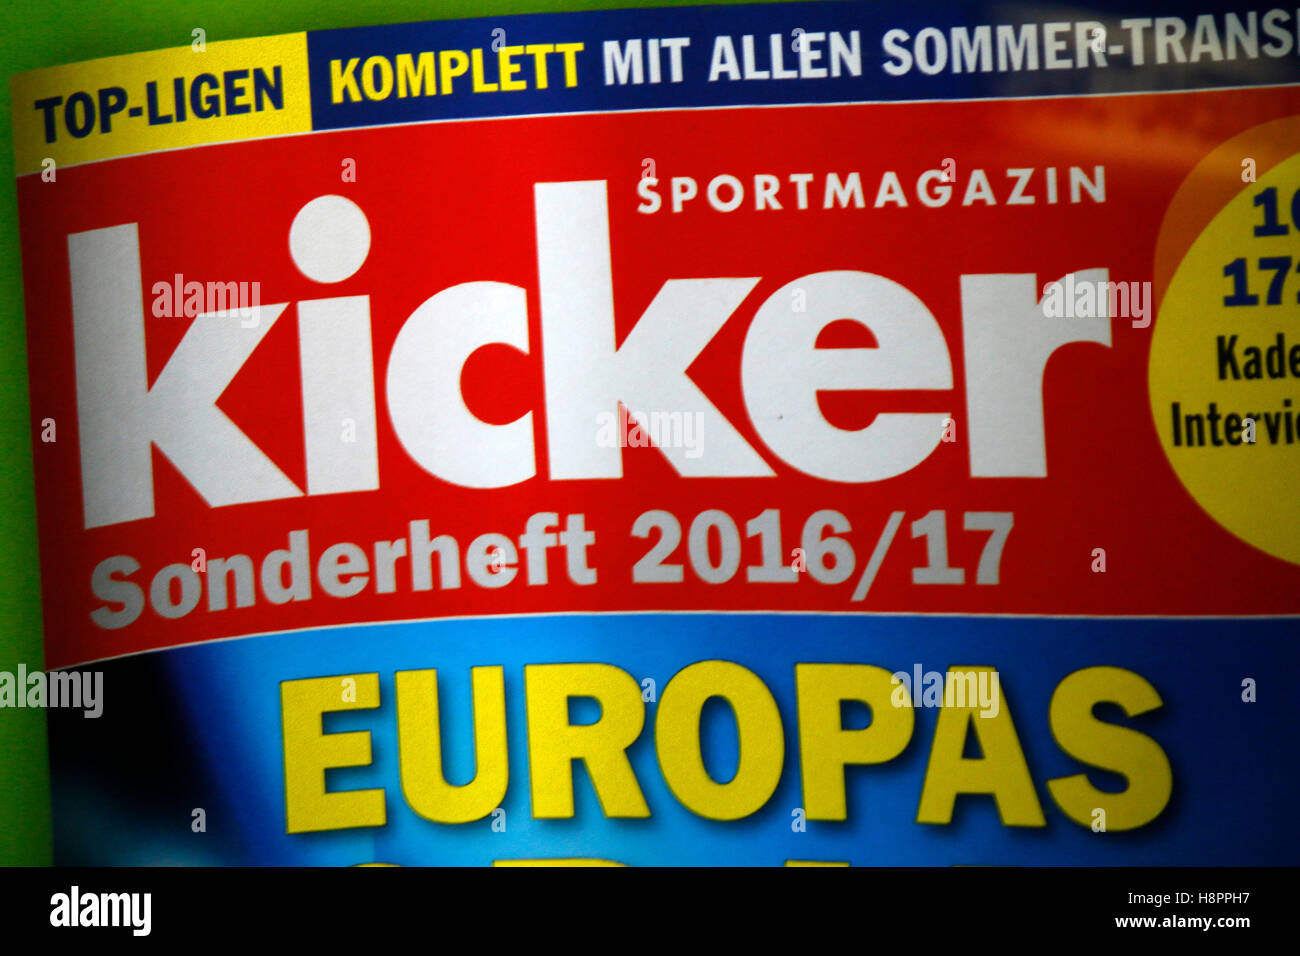 Das Logo der Marke "Kicker", Berlin. Stockfoto